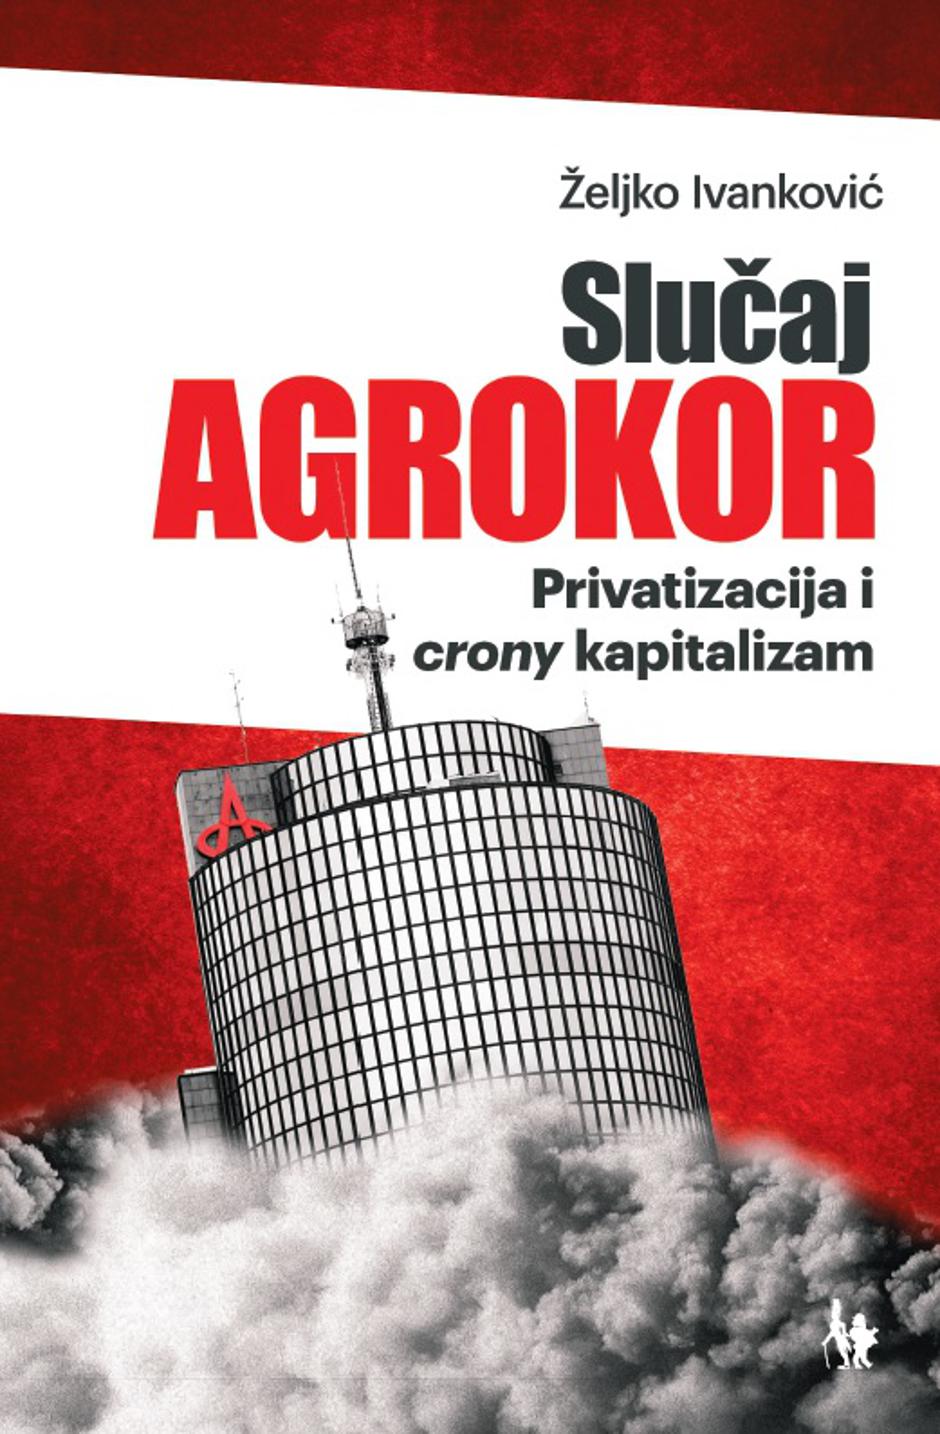 Željko Ivanković "Slučaj Agrokor" | Author: 